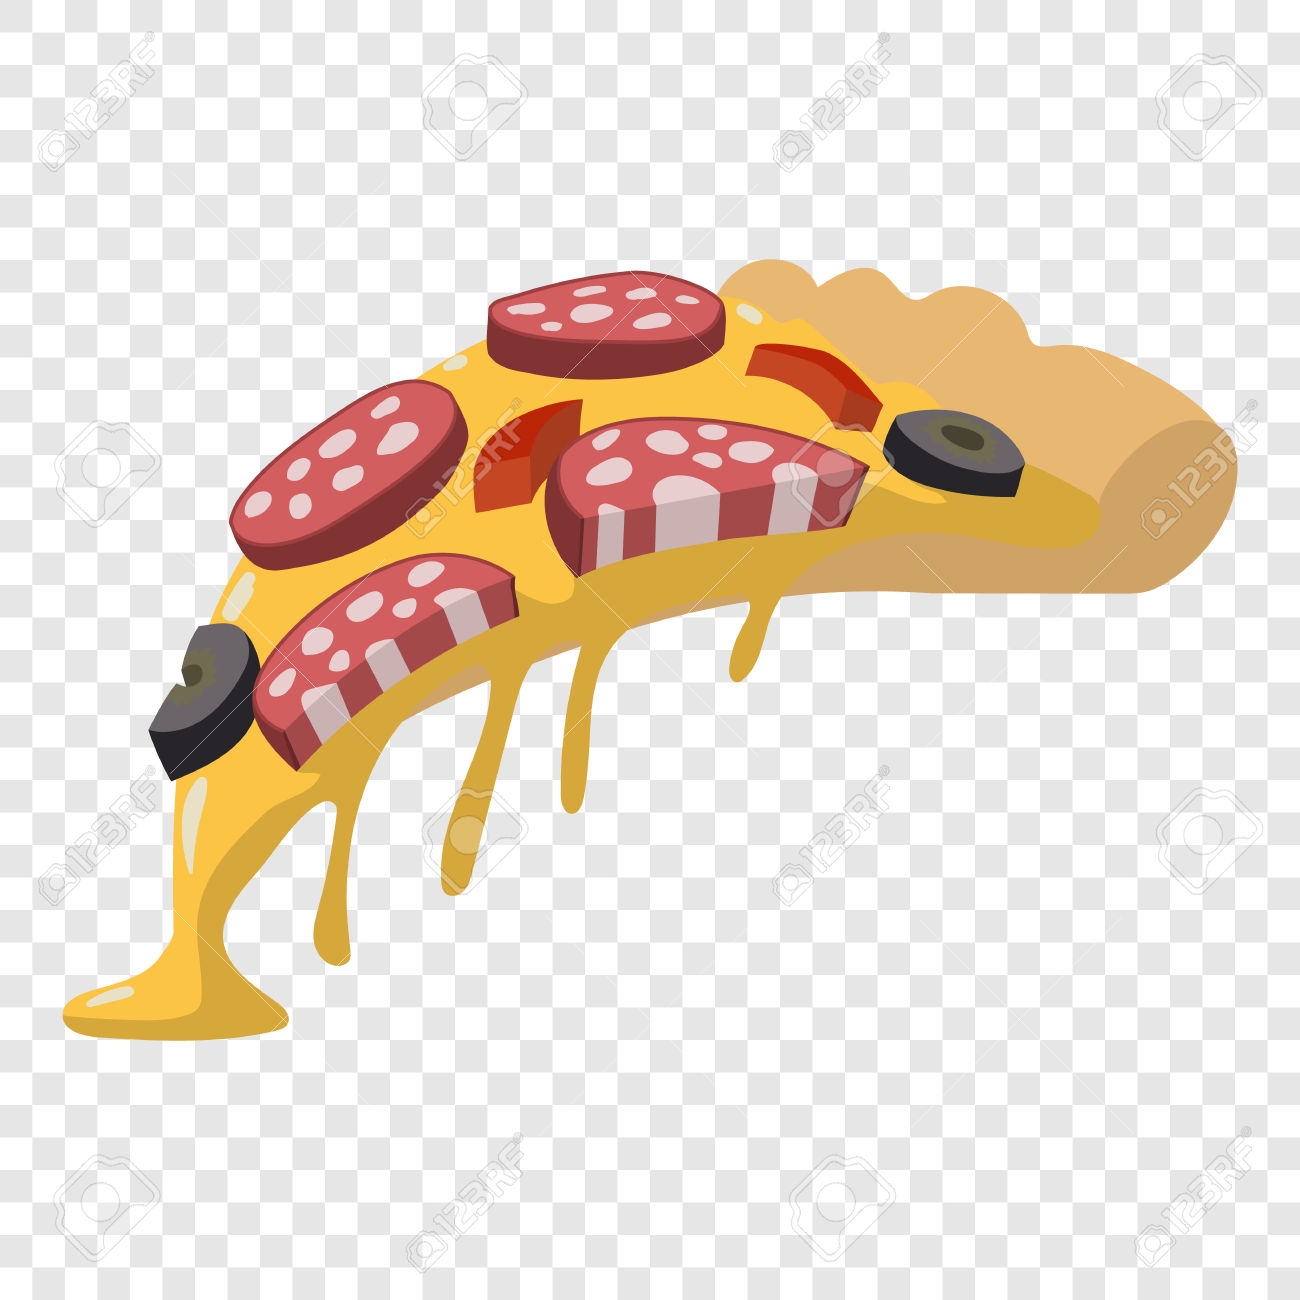 Pizza Slice Clipart No Background.